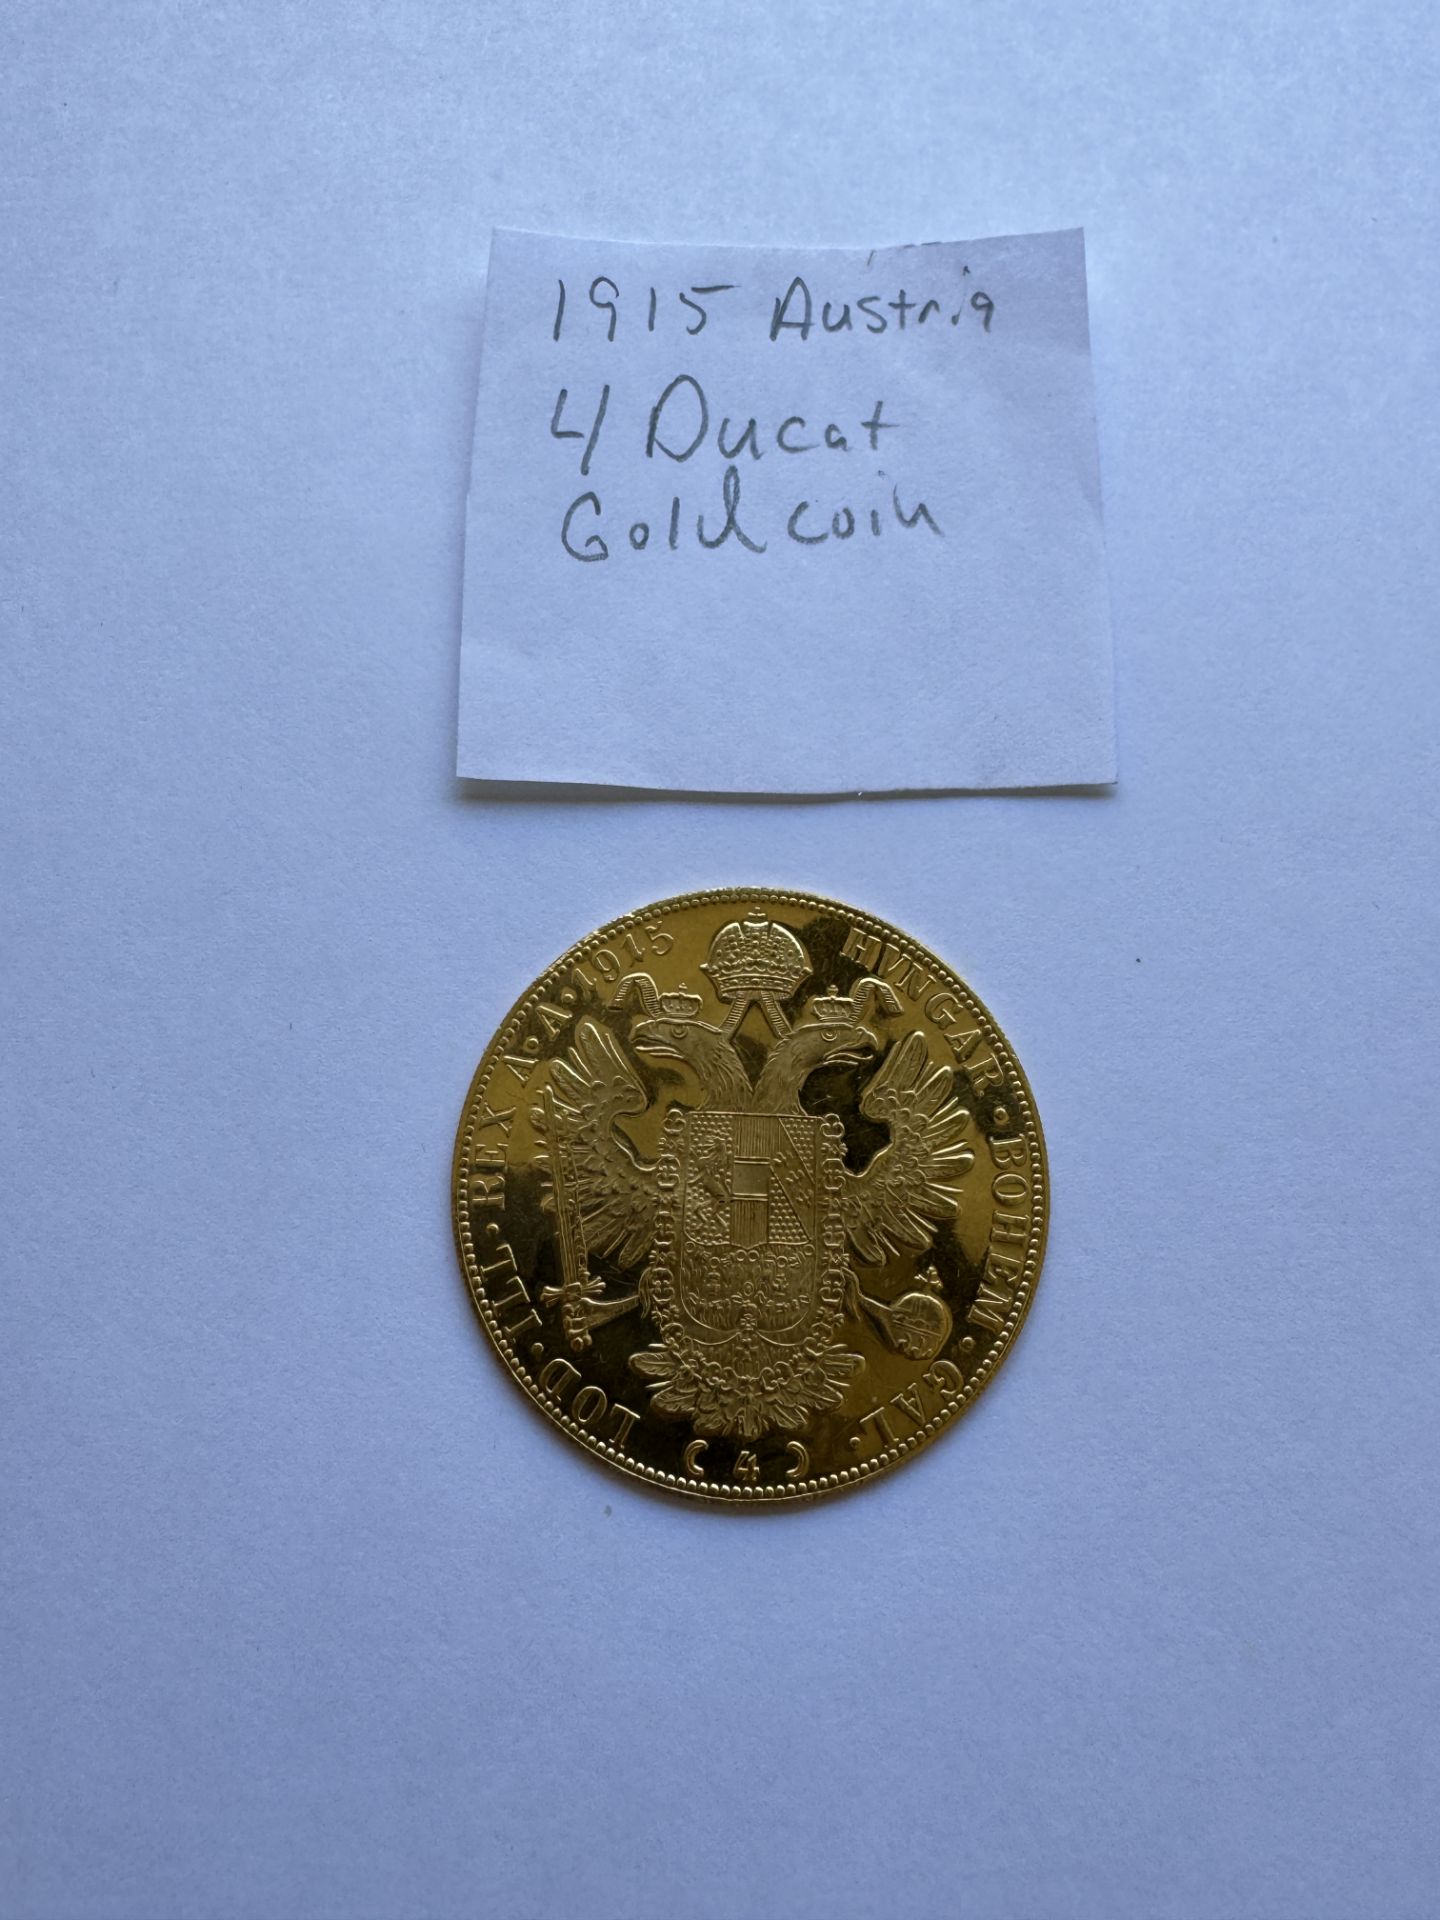 1915 AUSTRIA 4 DUCAT GOLD COIN - Image 2 of 2